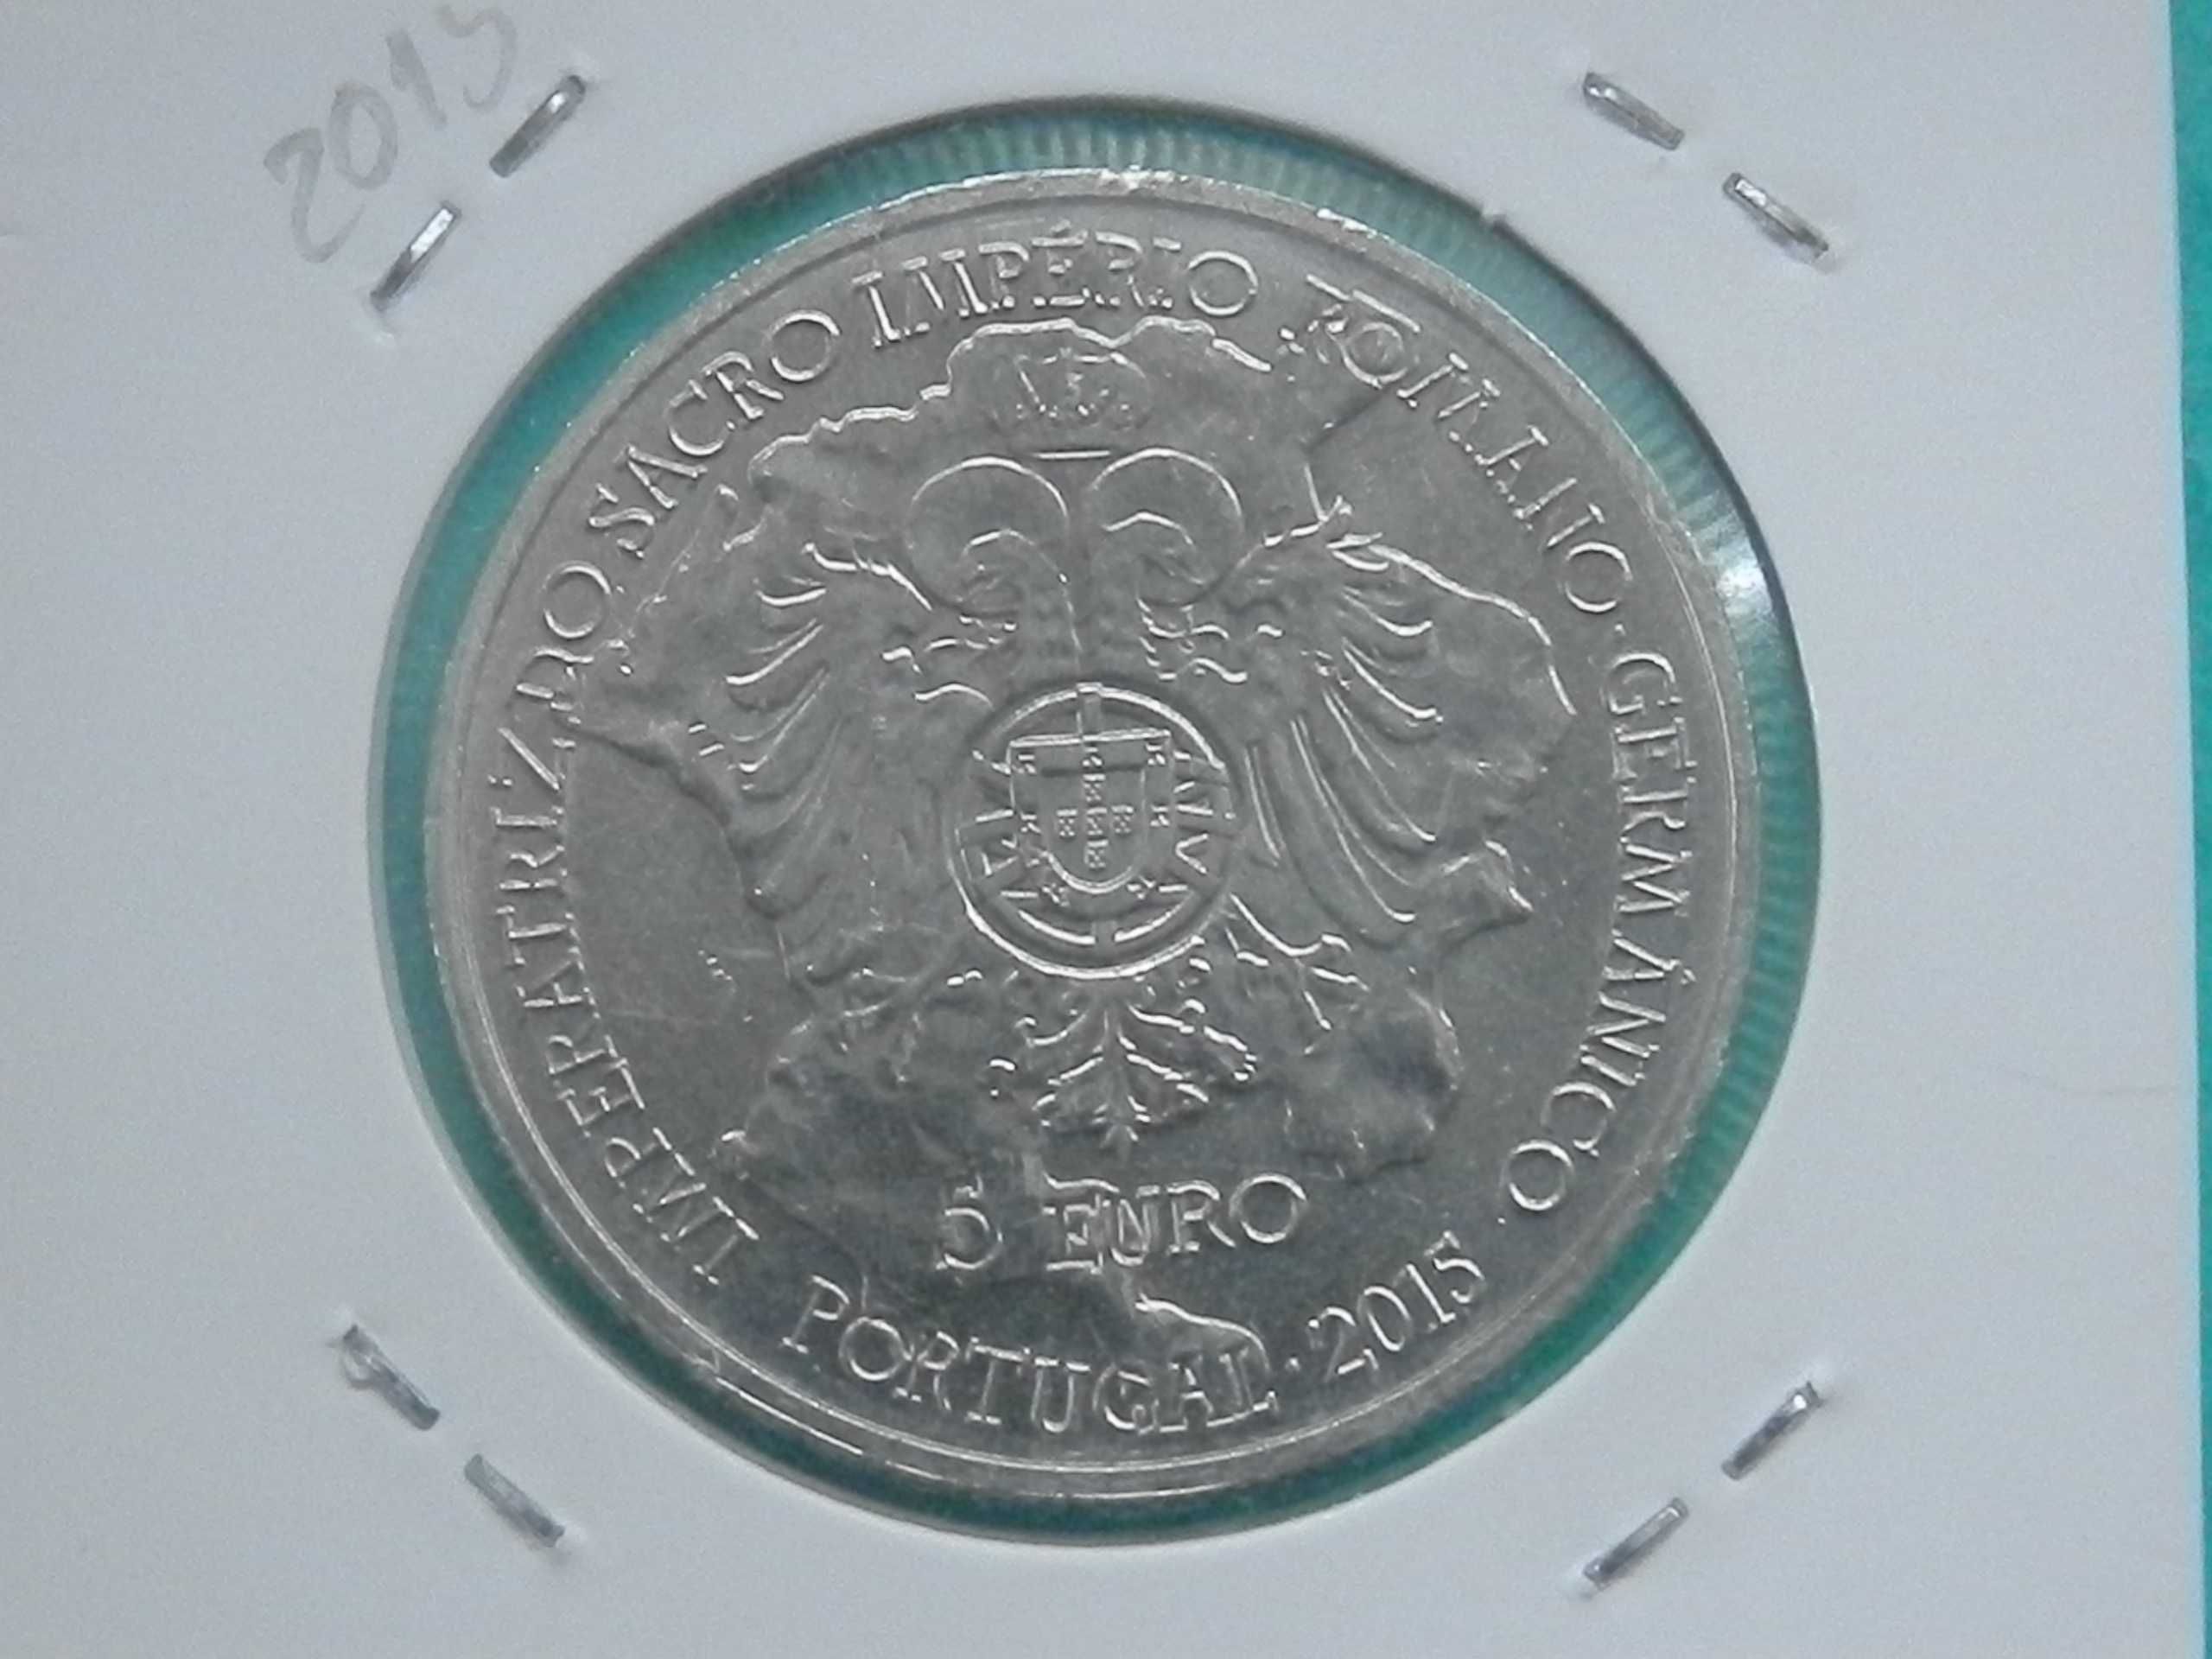 1074 - Euro: 5,00 euros 2015 cuni, Isabel de Portugal, por 5,50